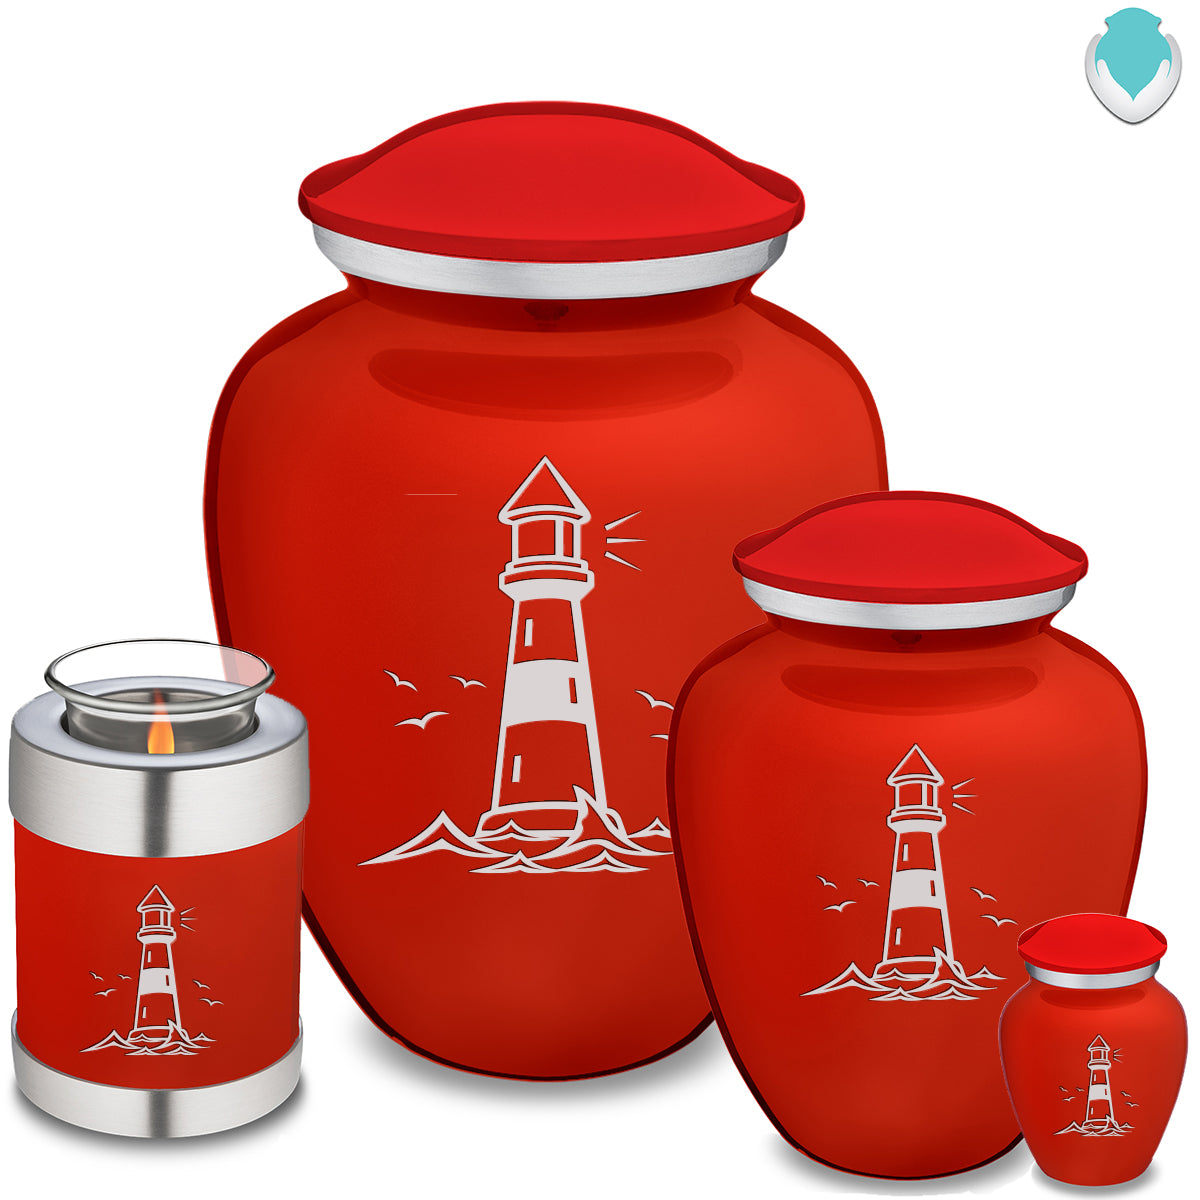 Medium Embrace Bright Red Lighthouse Cremation Urn